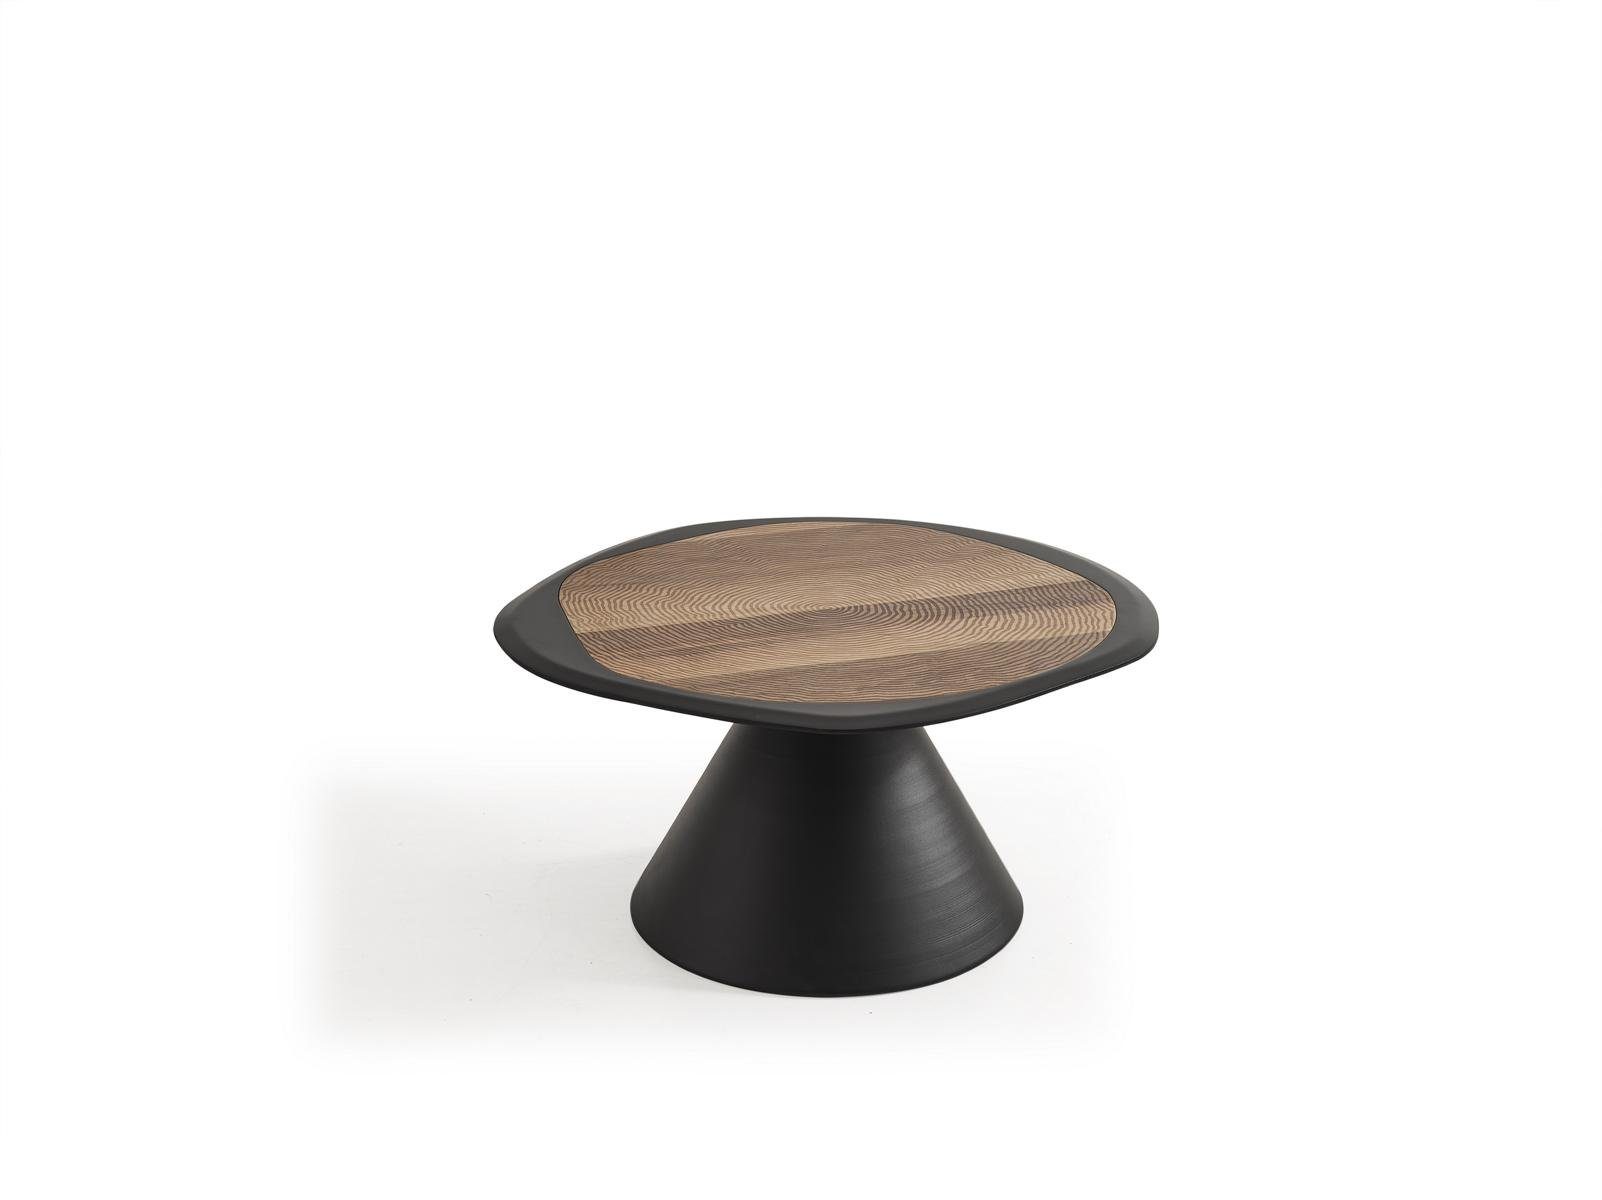 Set Designer JVmoebel Beistelltisch Made Tische Europe (2x Couchtisch in Couchtische Couchtische),